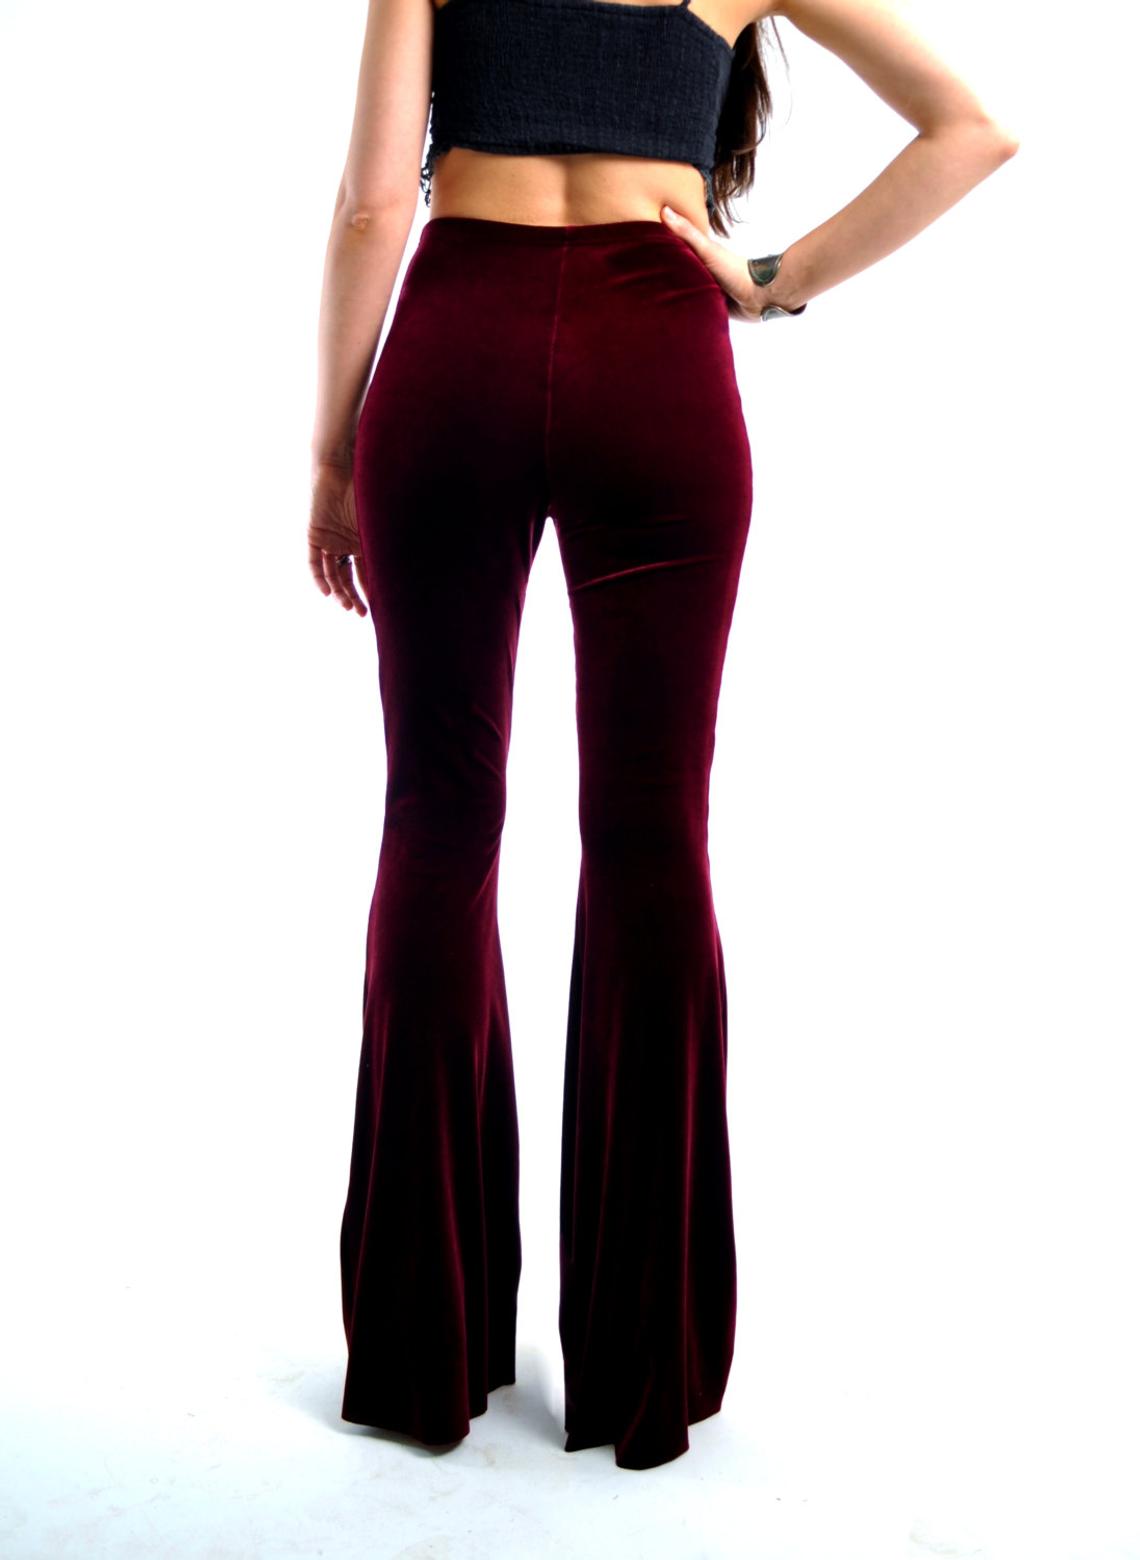 NWOT y2k black burgundy velvet graphic low rise flare pants sz 7 by HipChix  VNTG